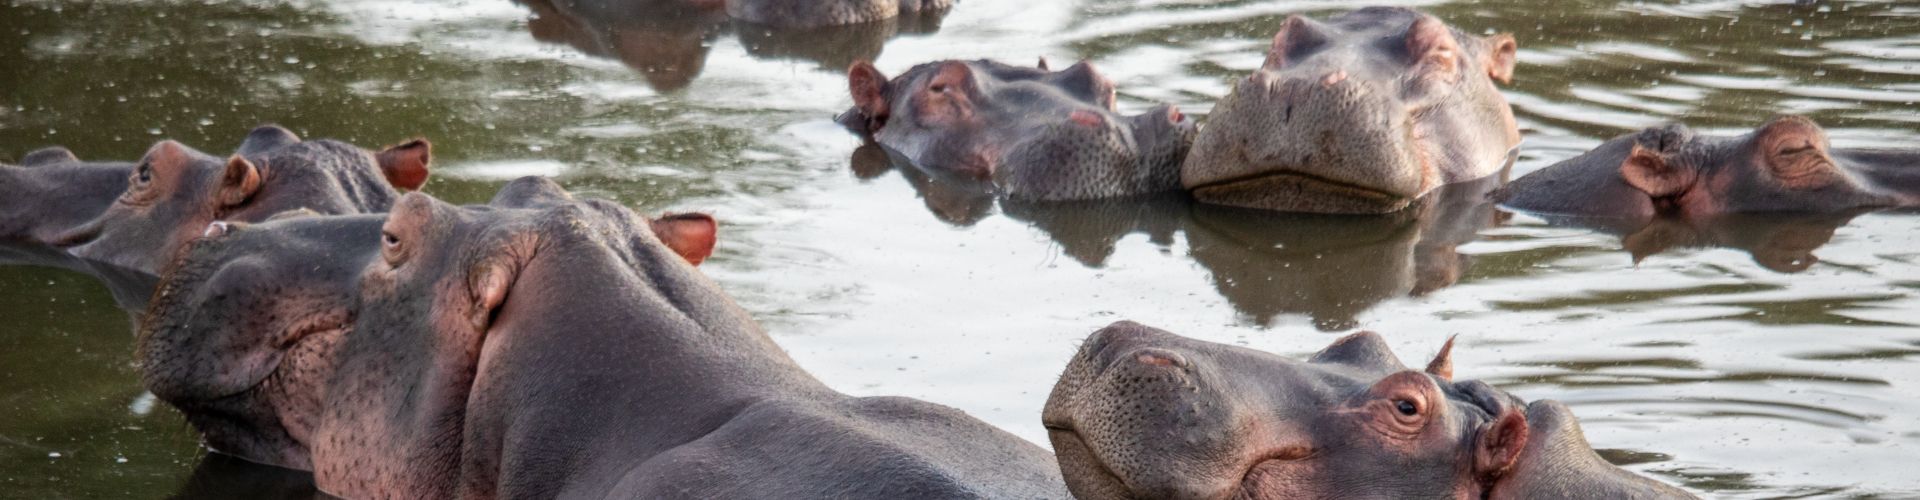 Piscina degli ippopotami nel Parco Nazionale del Lago Manyara